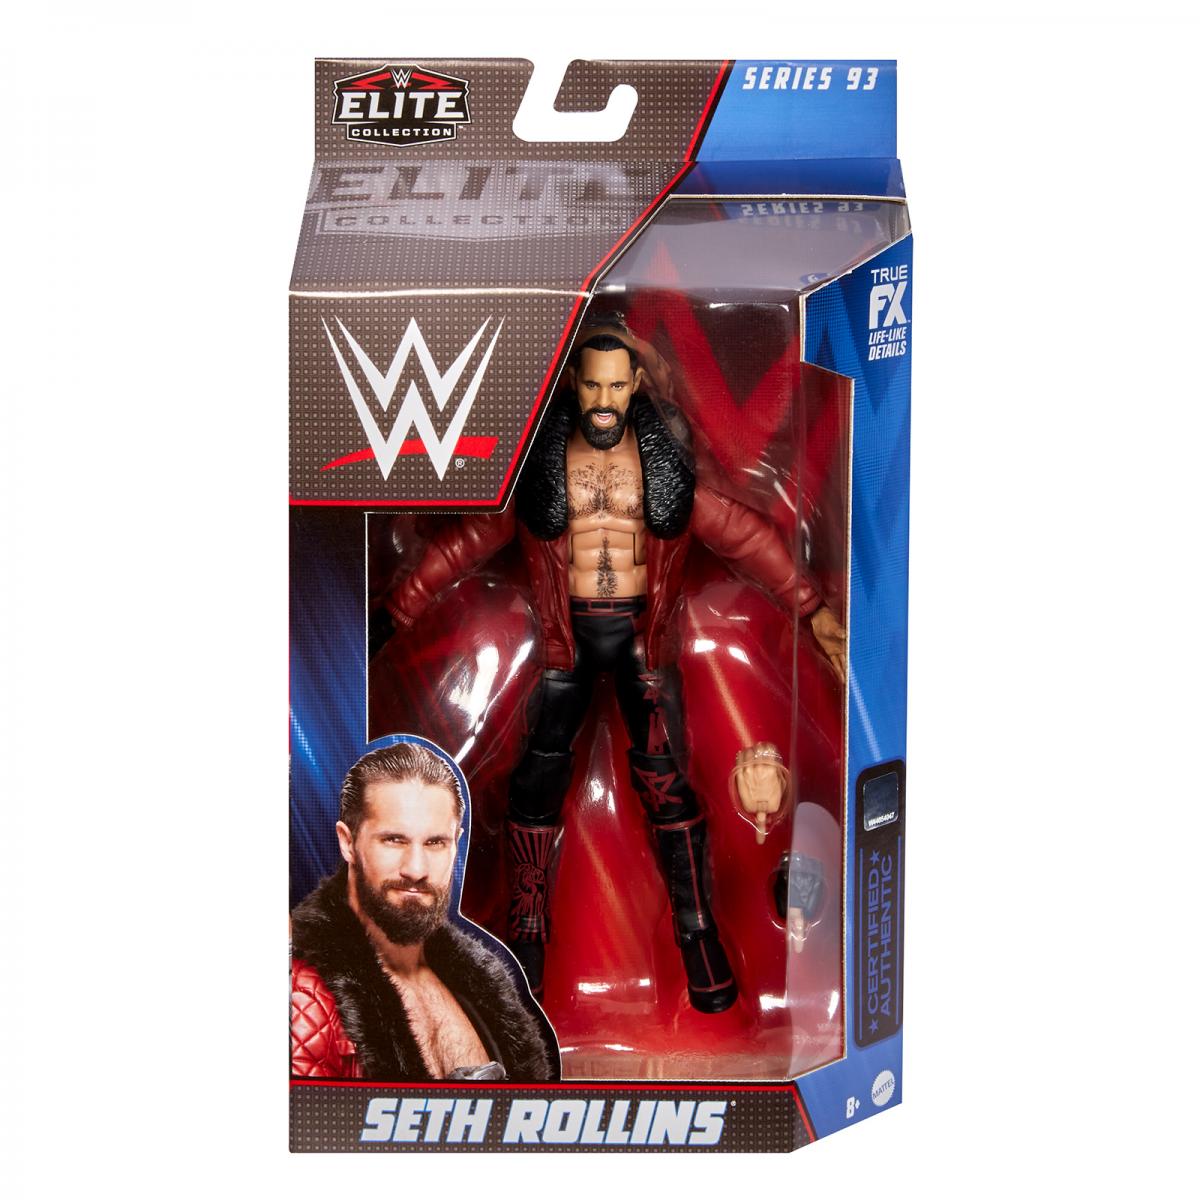 WWE Mattel Elite Collection Series 93 Seth Rollins